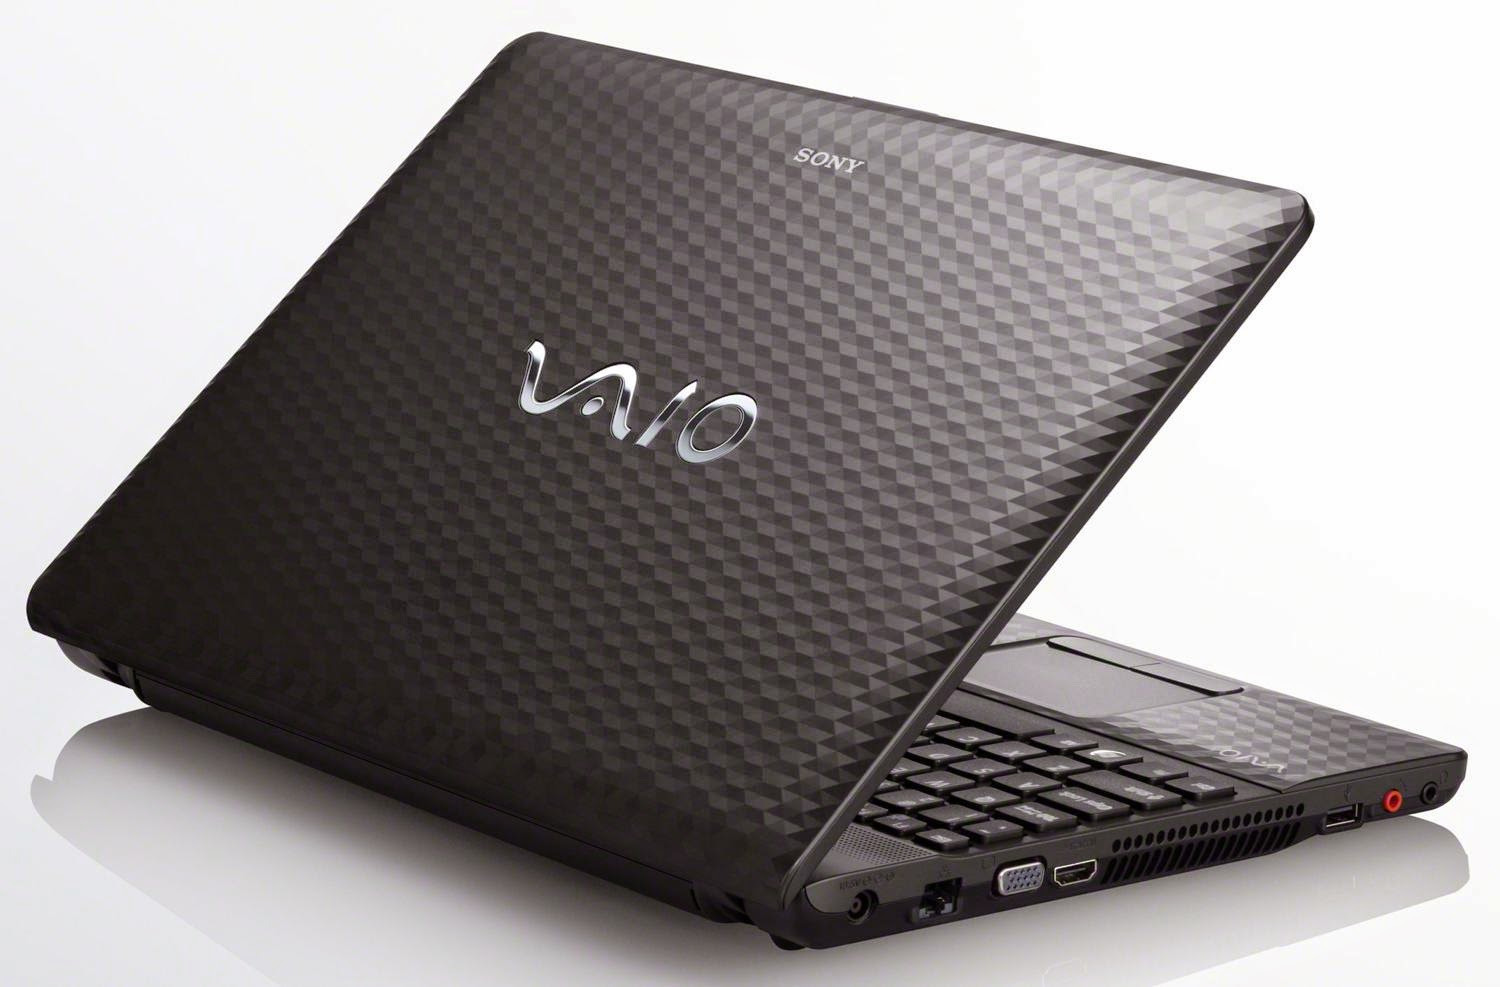 Harga Laptop Terbaru Sony Vaio Desember 2014